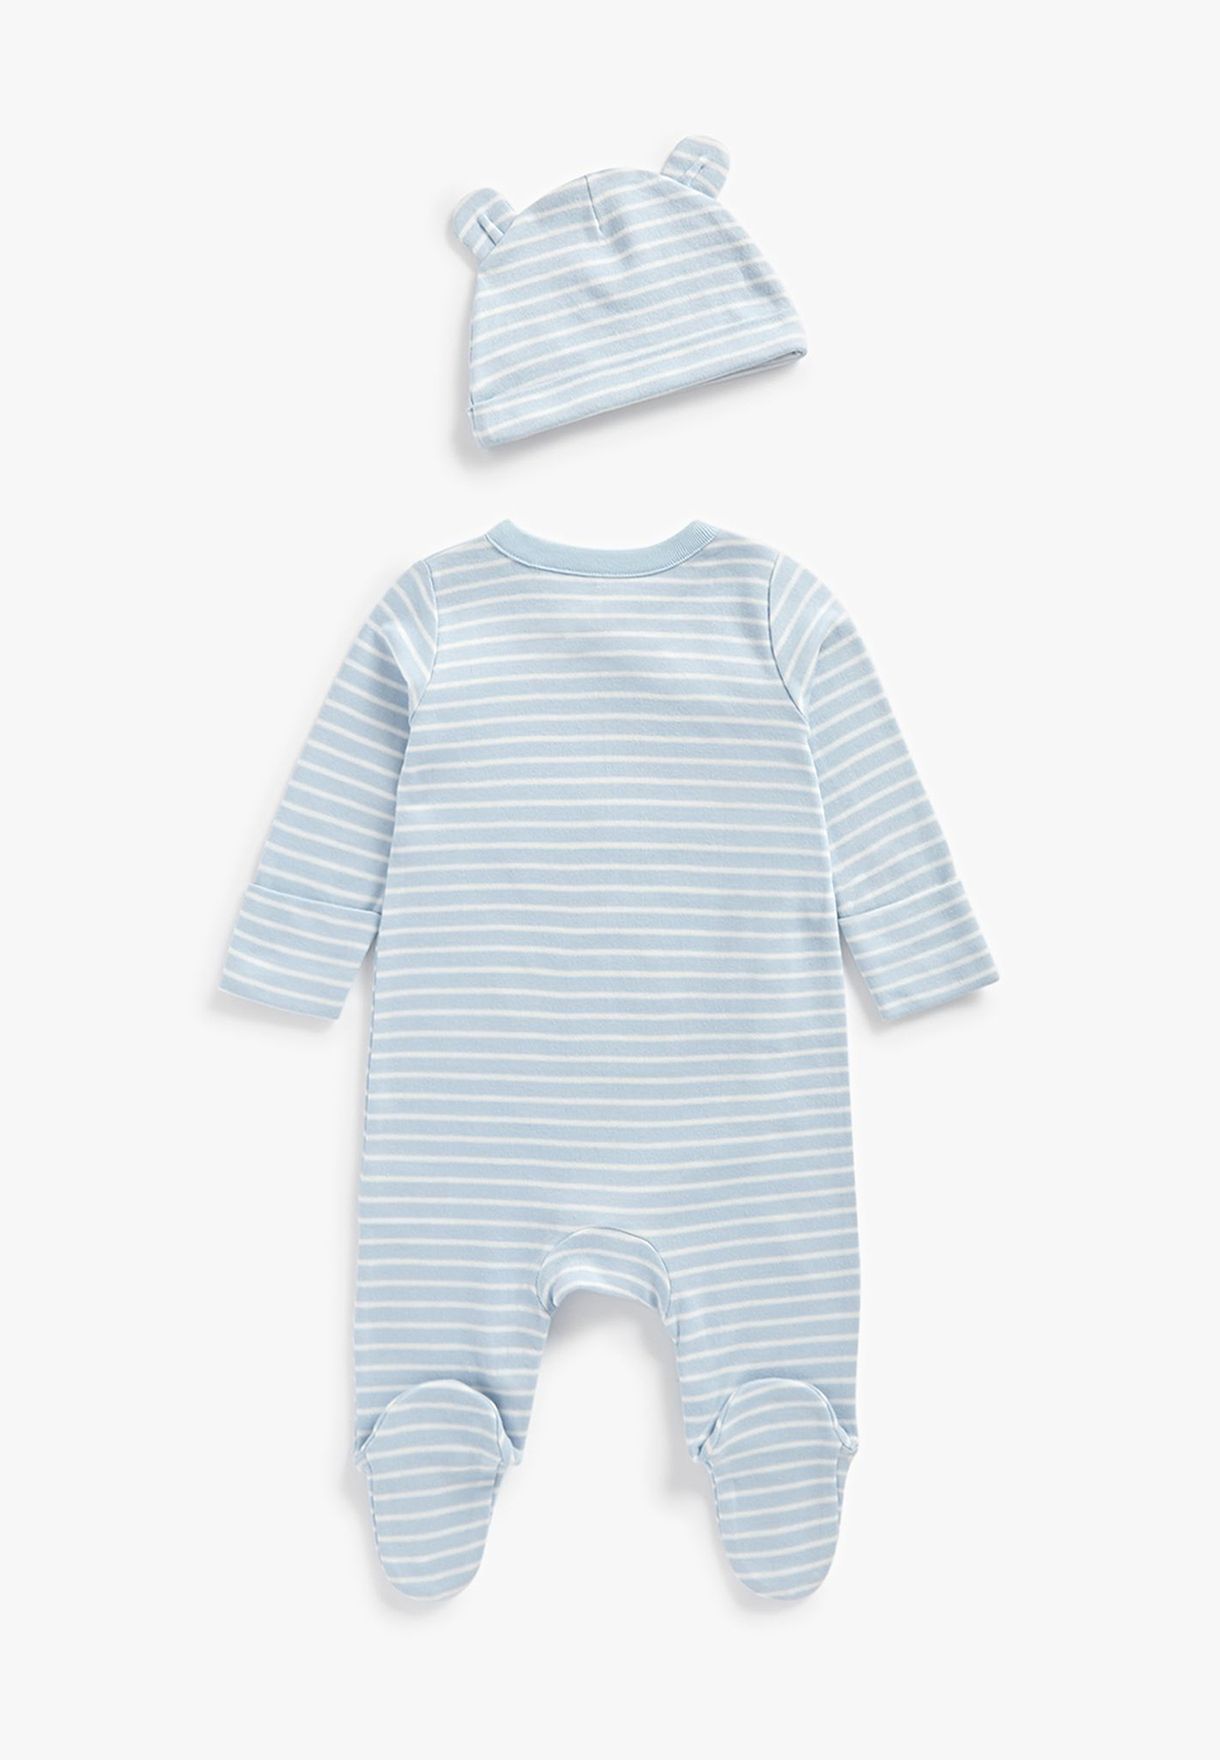 Infant Striped Onesies & Hat